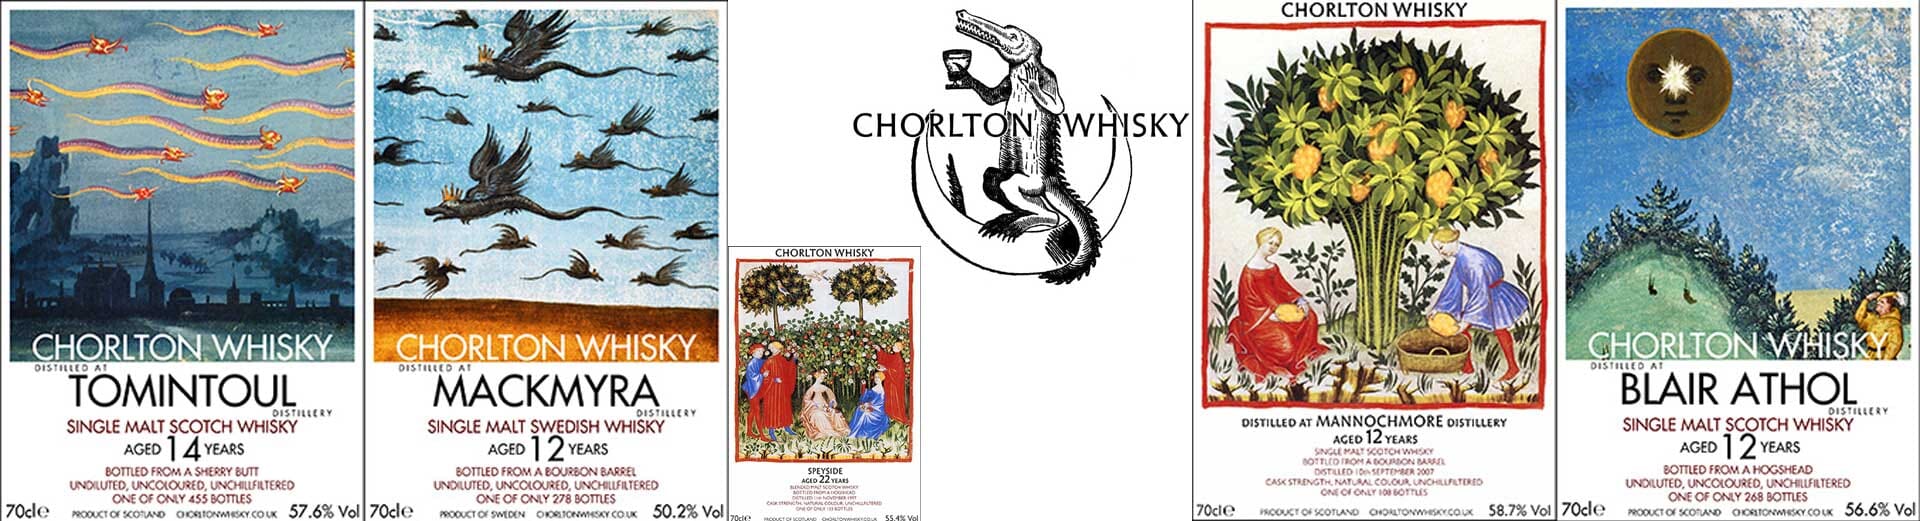 Chorlton Whisky Independent Bottlers